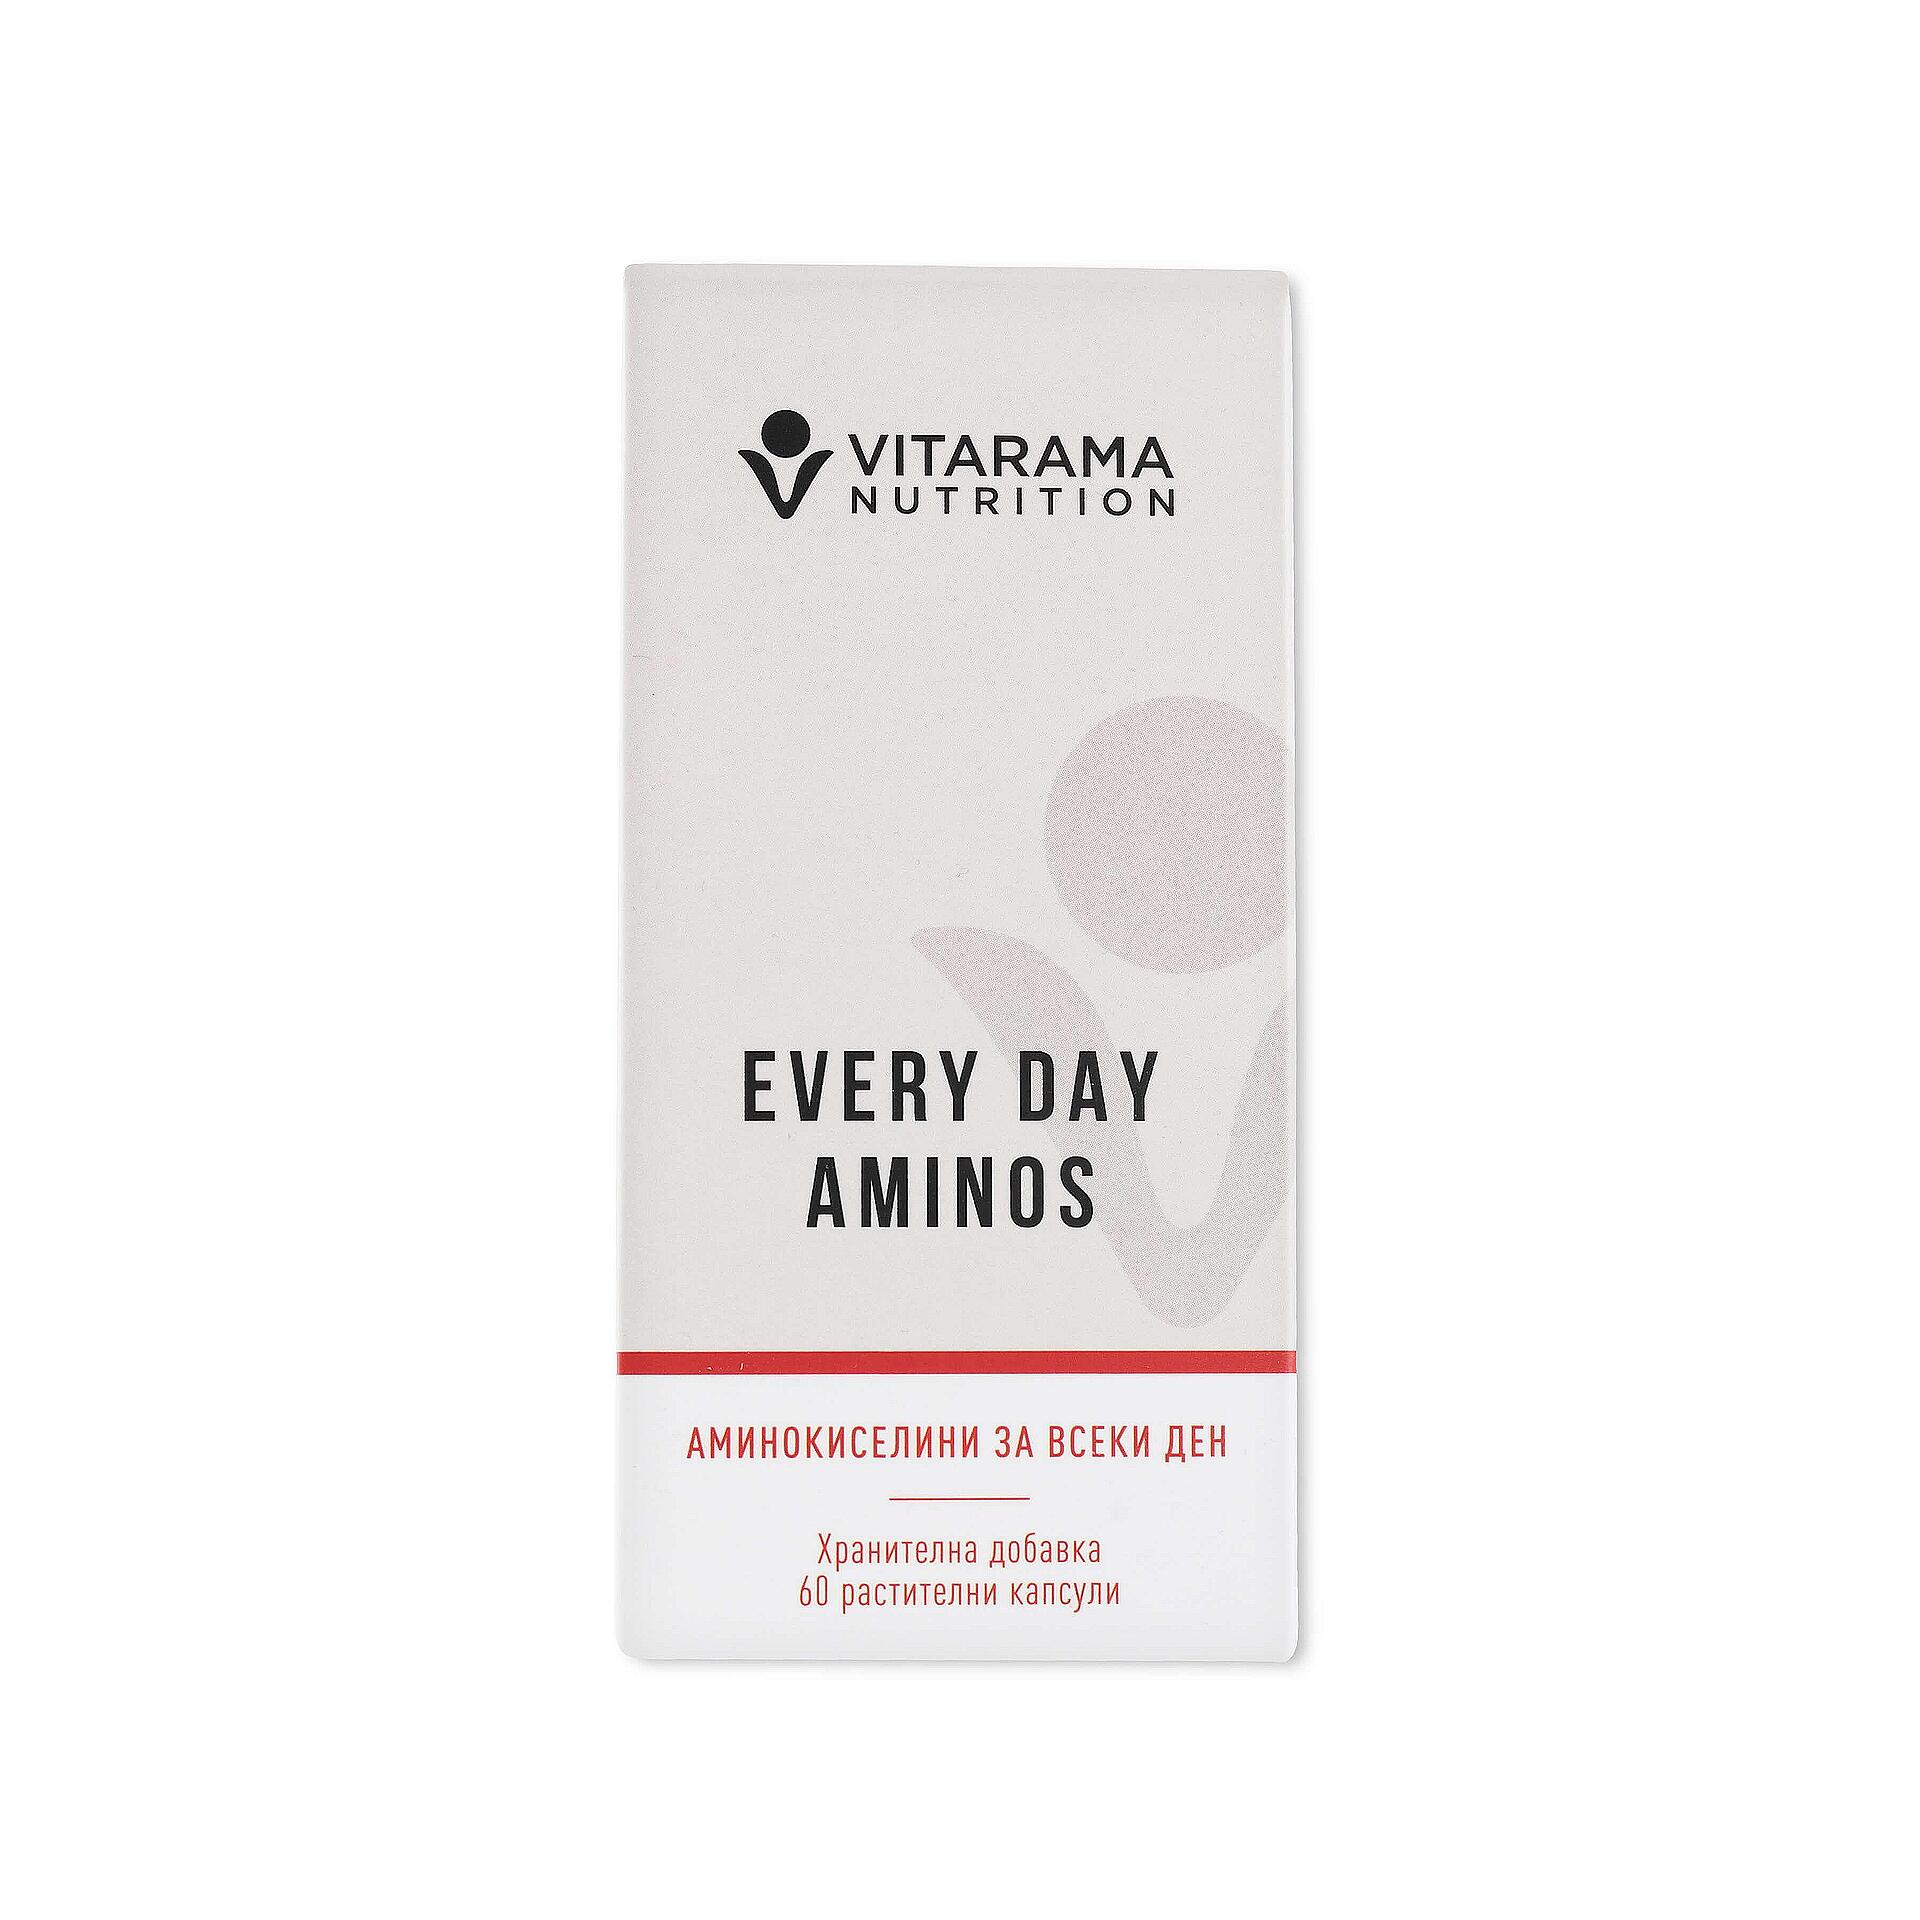 Everyday aminos Аминокиселини за Всеки Ден, 60 капсули, Vita Rama Nutrition